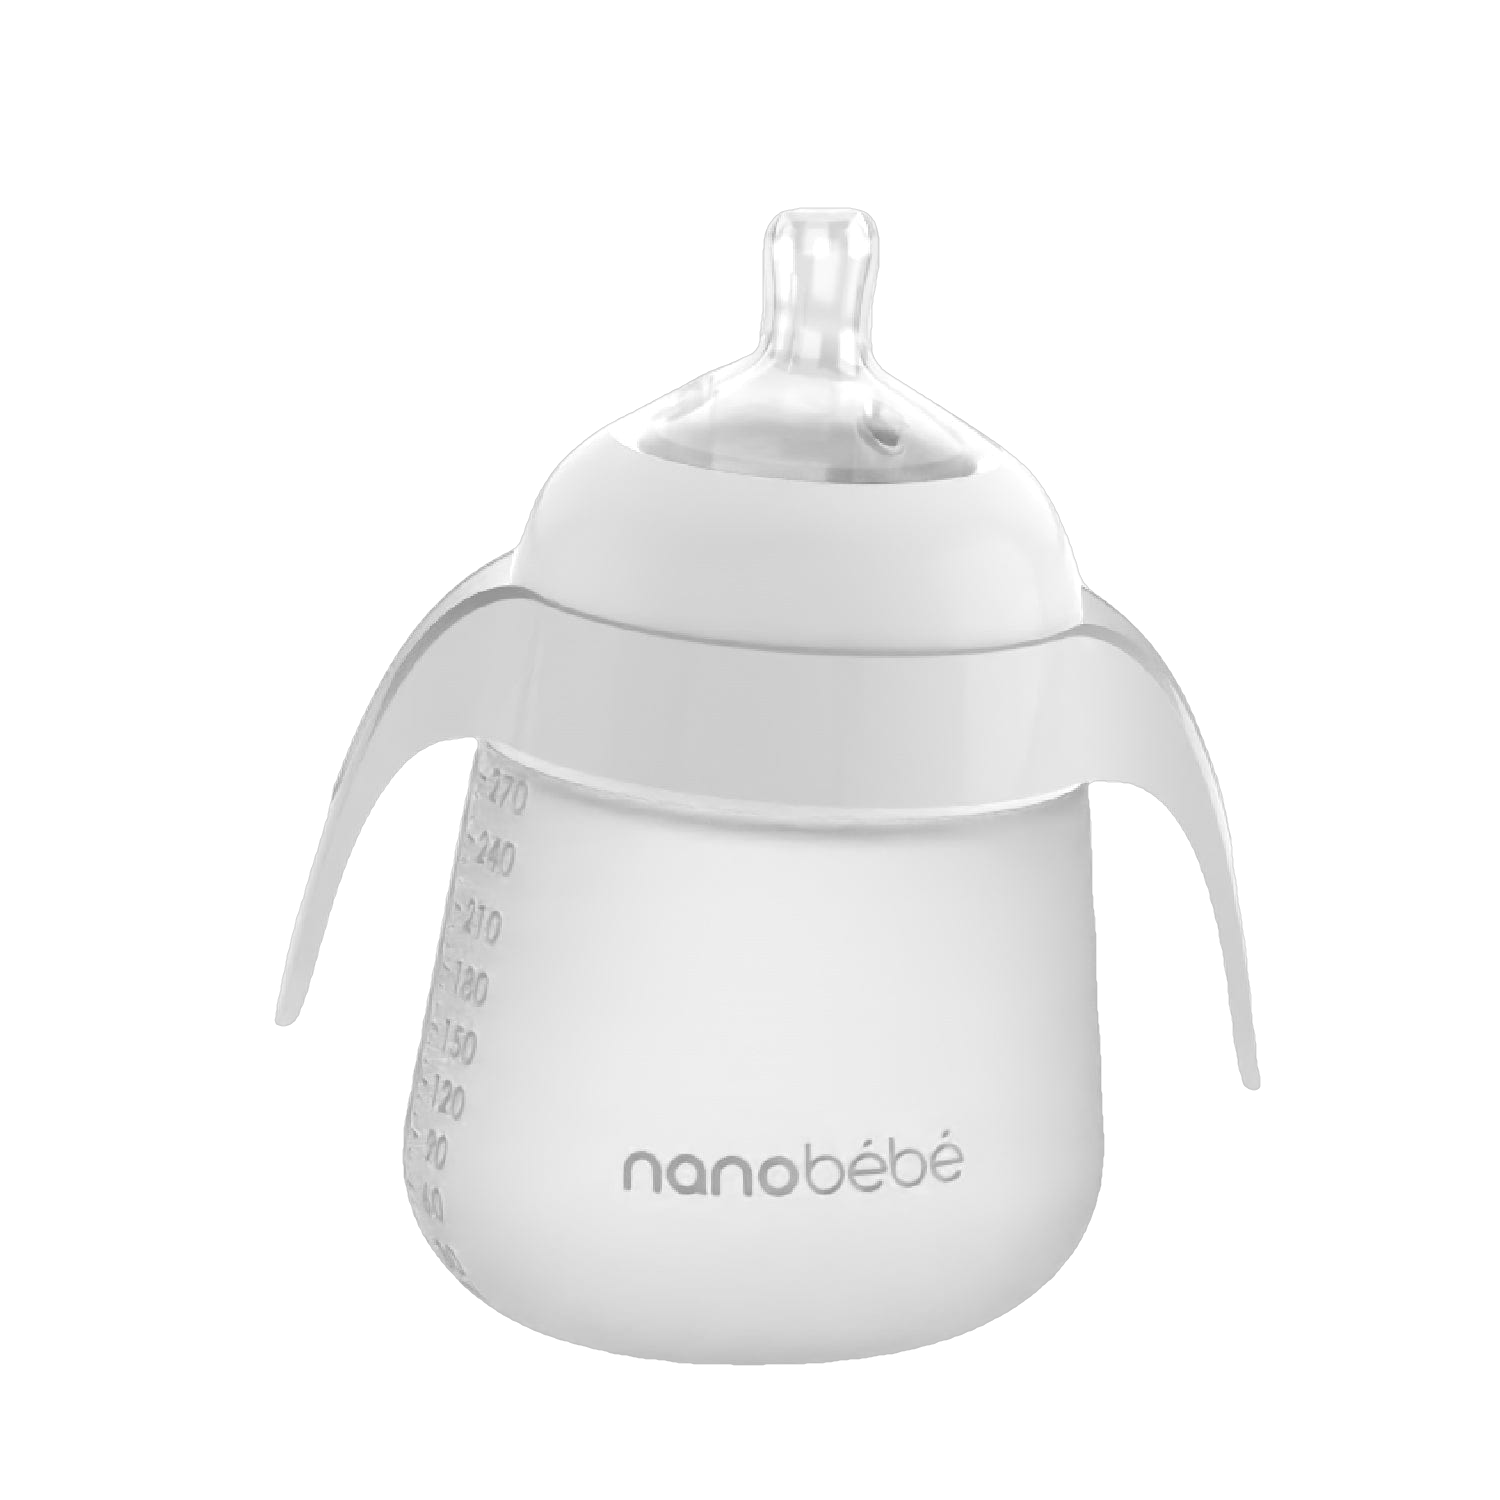 Maternity gym outfit and Nanobébé gift set